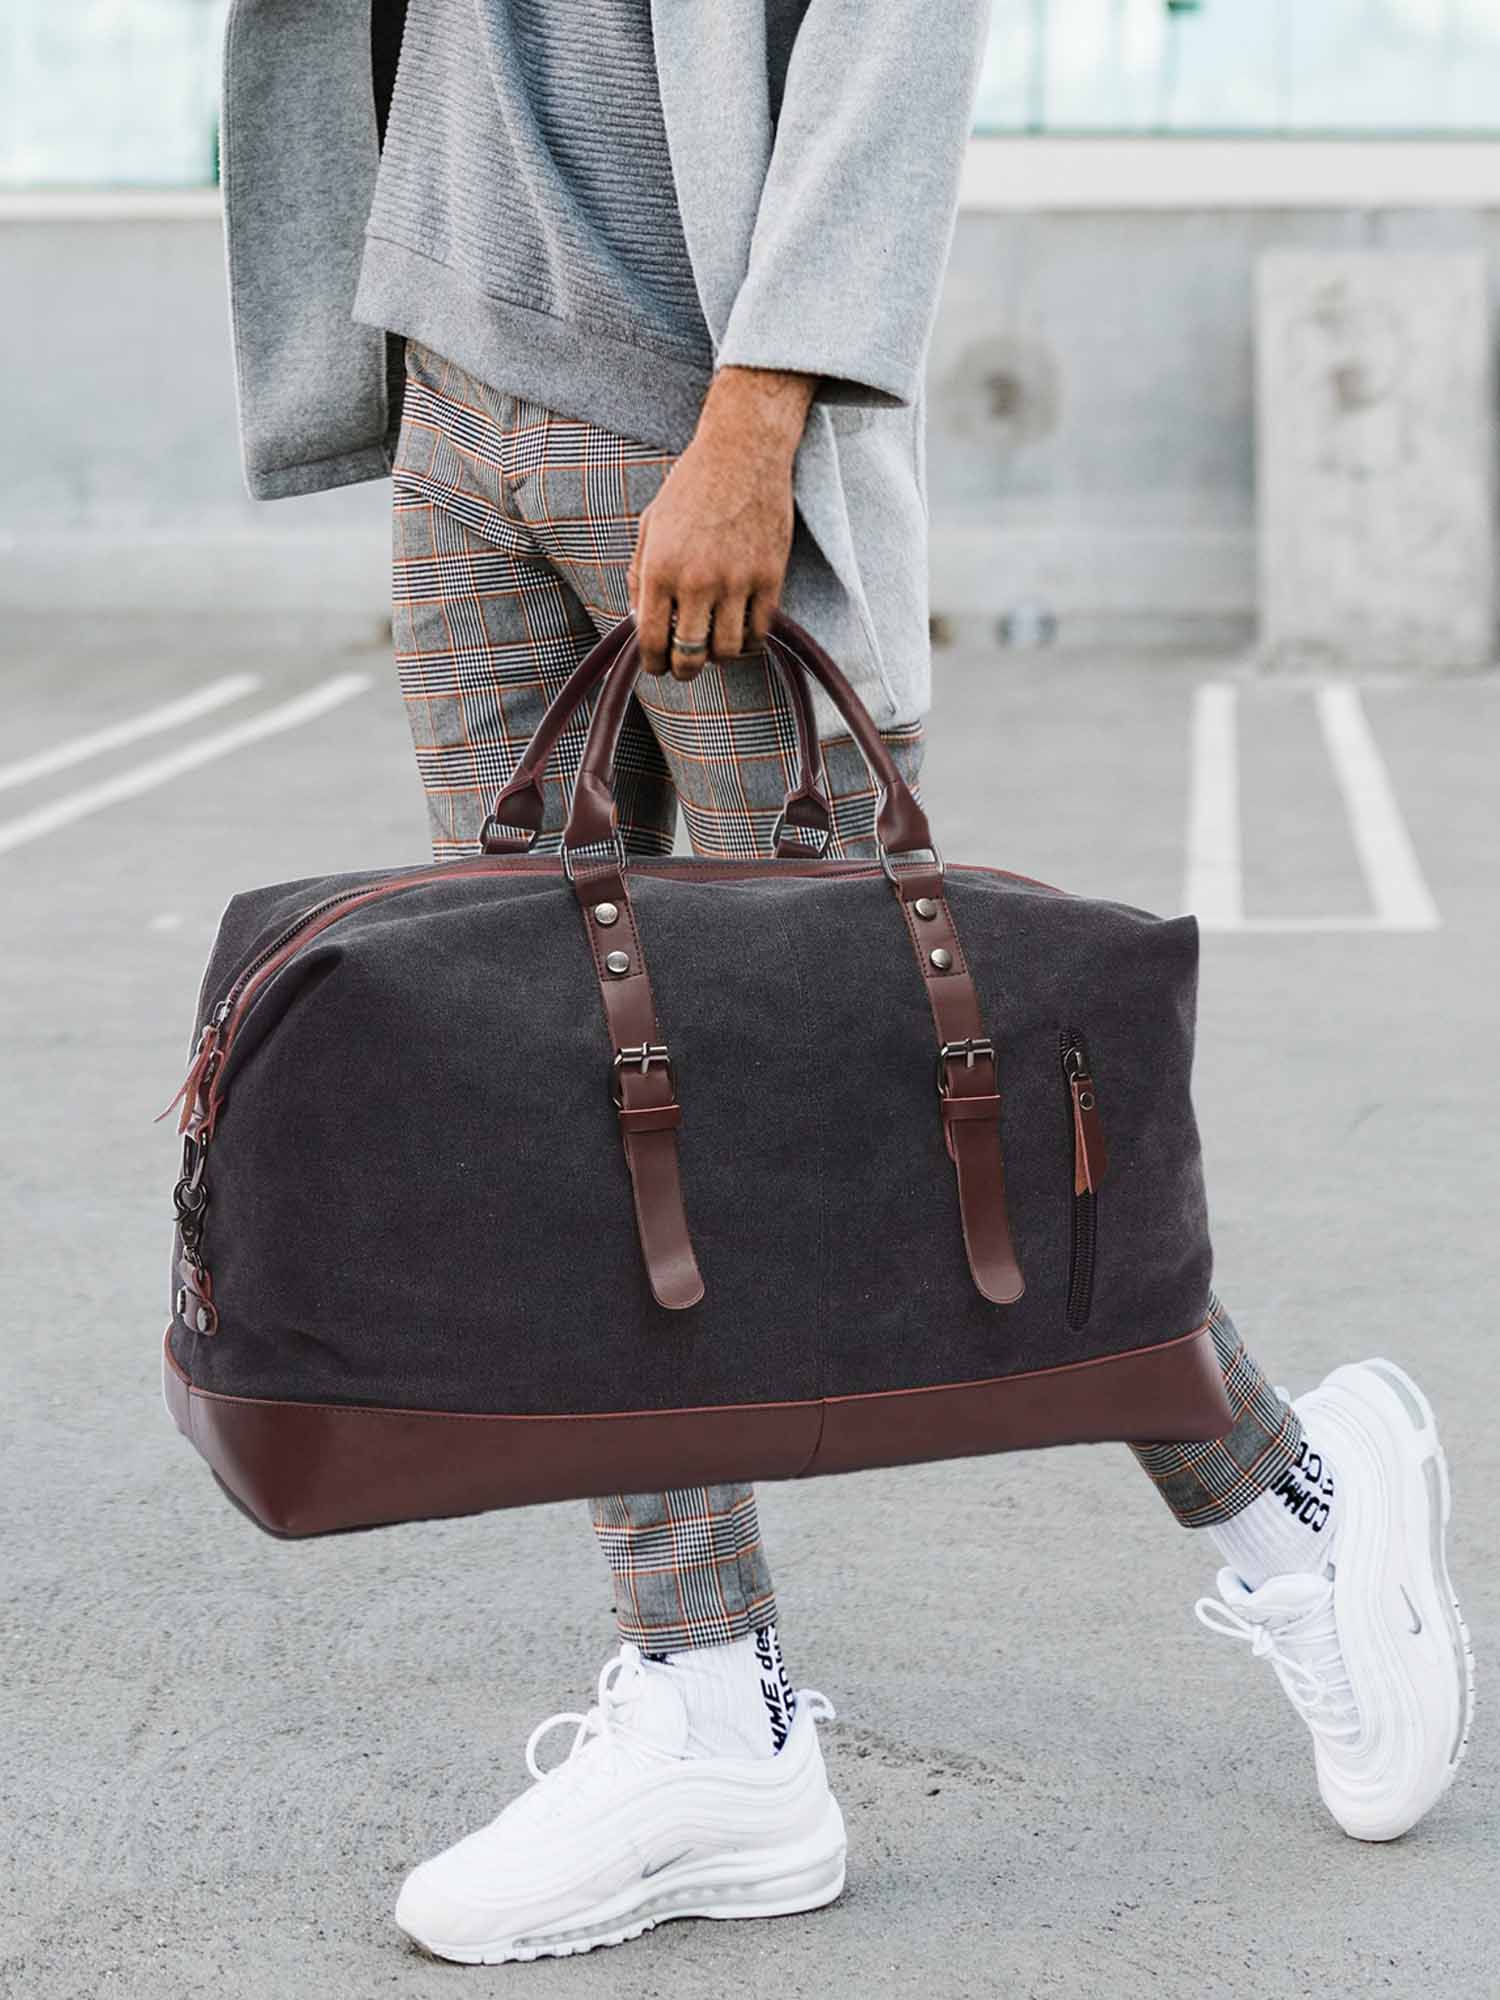 Cotopaxi Allpa 70L Duffel Bag – The Backpacker